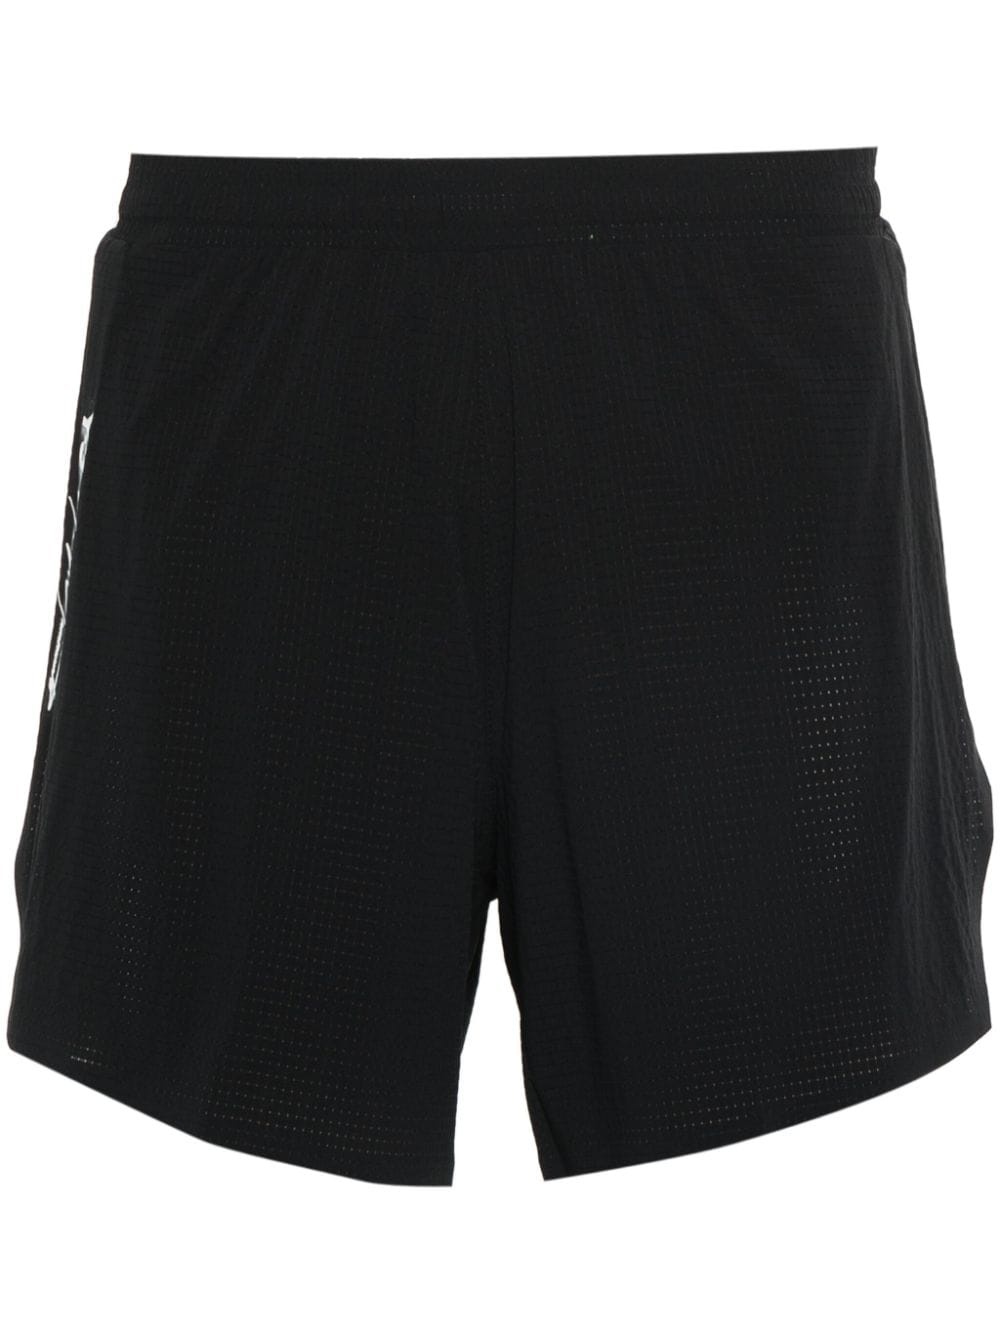 Run perforated shorts - 1